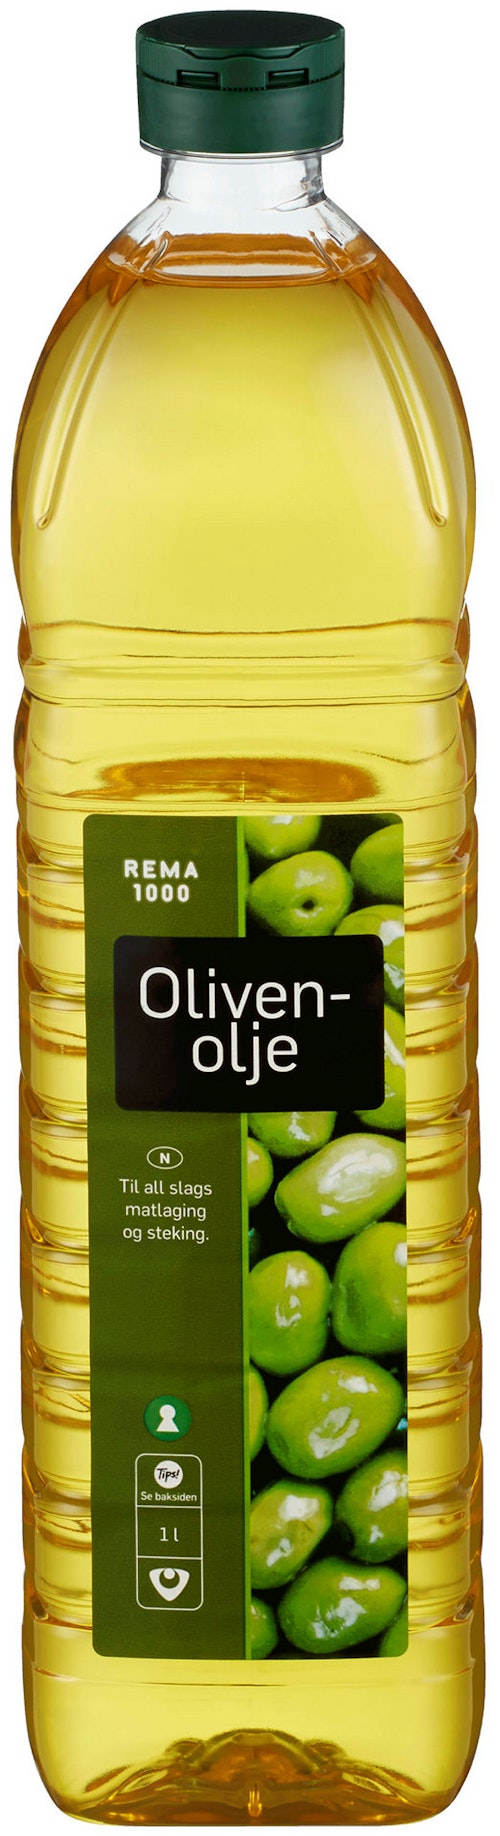 REMA 1000 Olivenolje 1 l